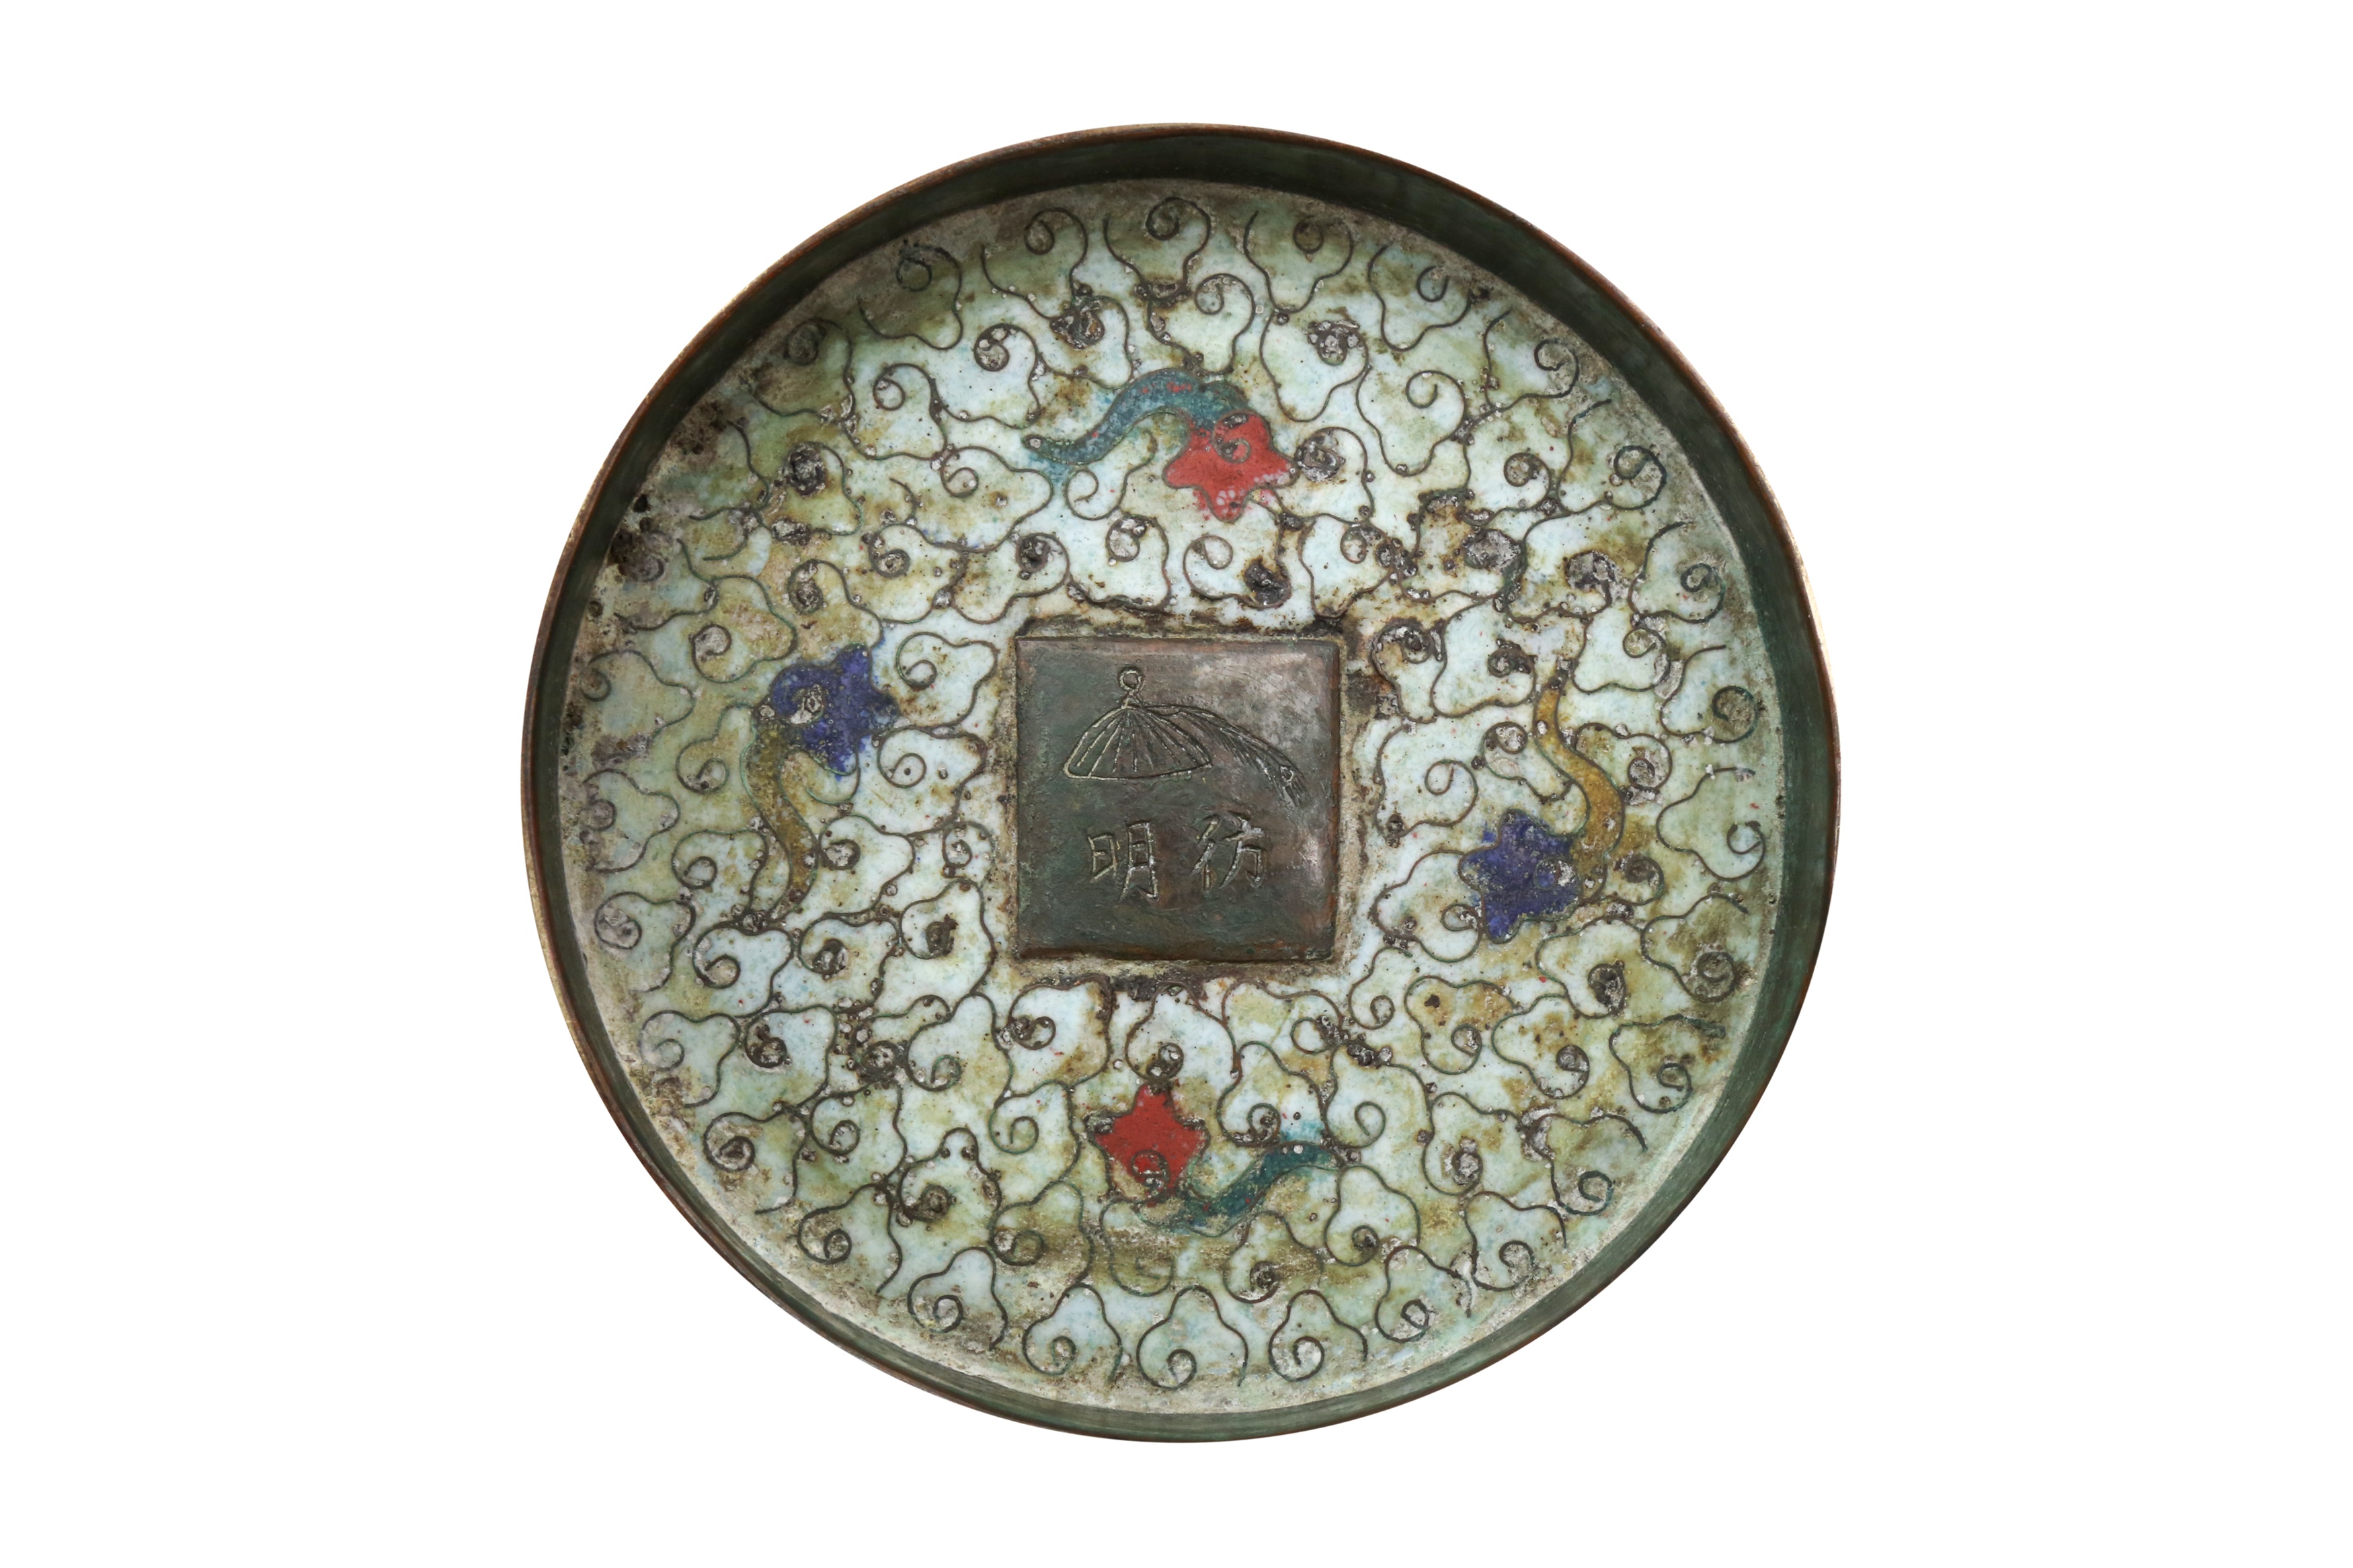 A PAIR OF CHINESE CLOISONNE ENAMEL BOWLS 清十九世紀 銅胎掐絲琺瑯盌一對 - Image 3 of 23